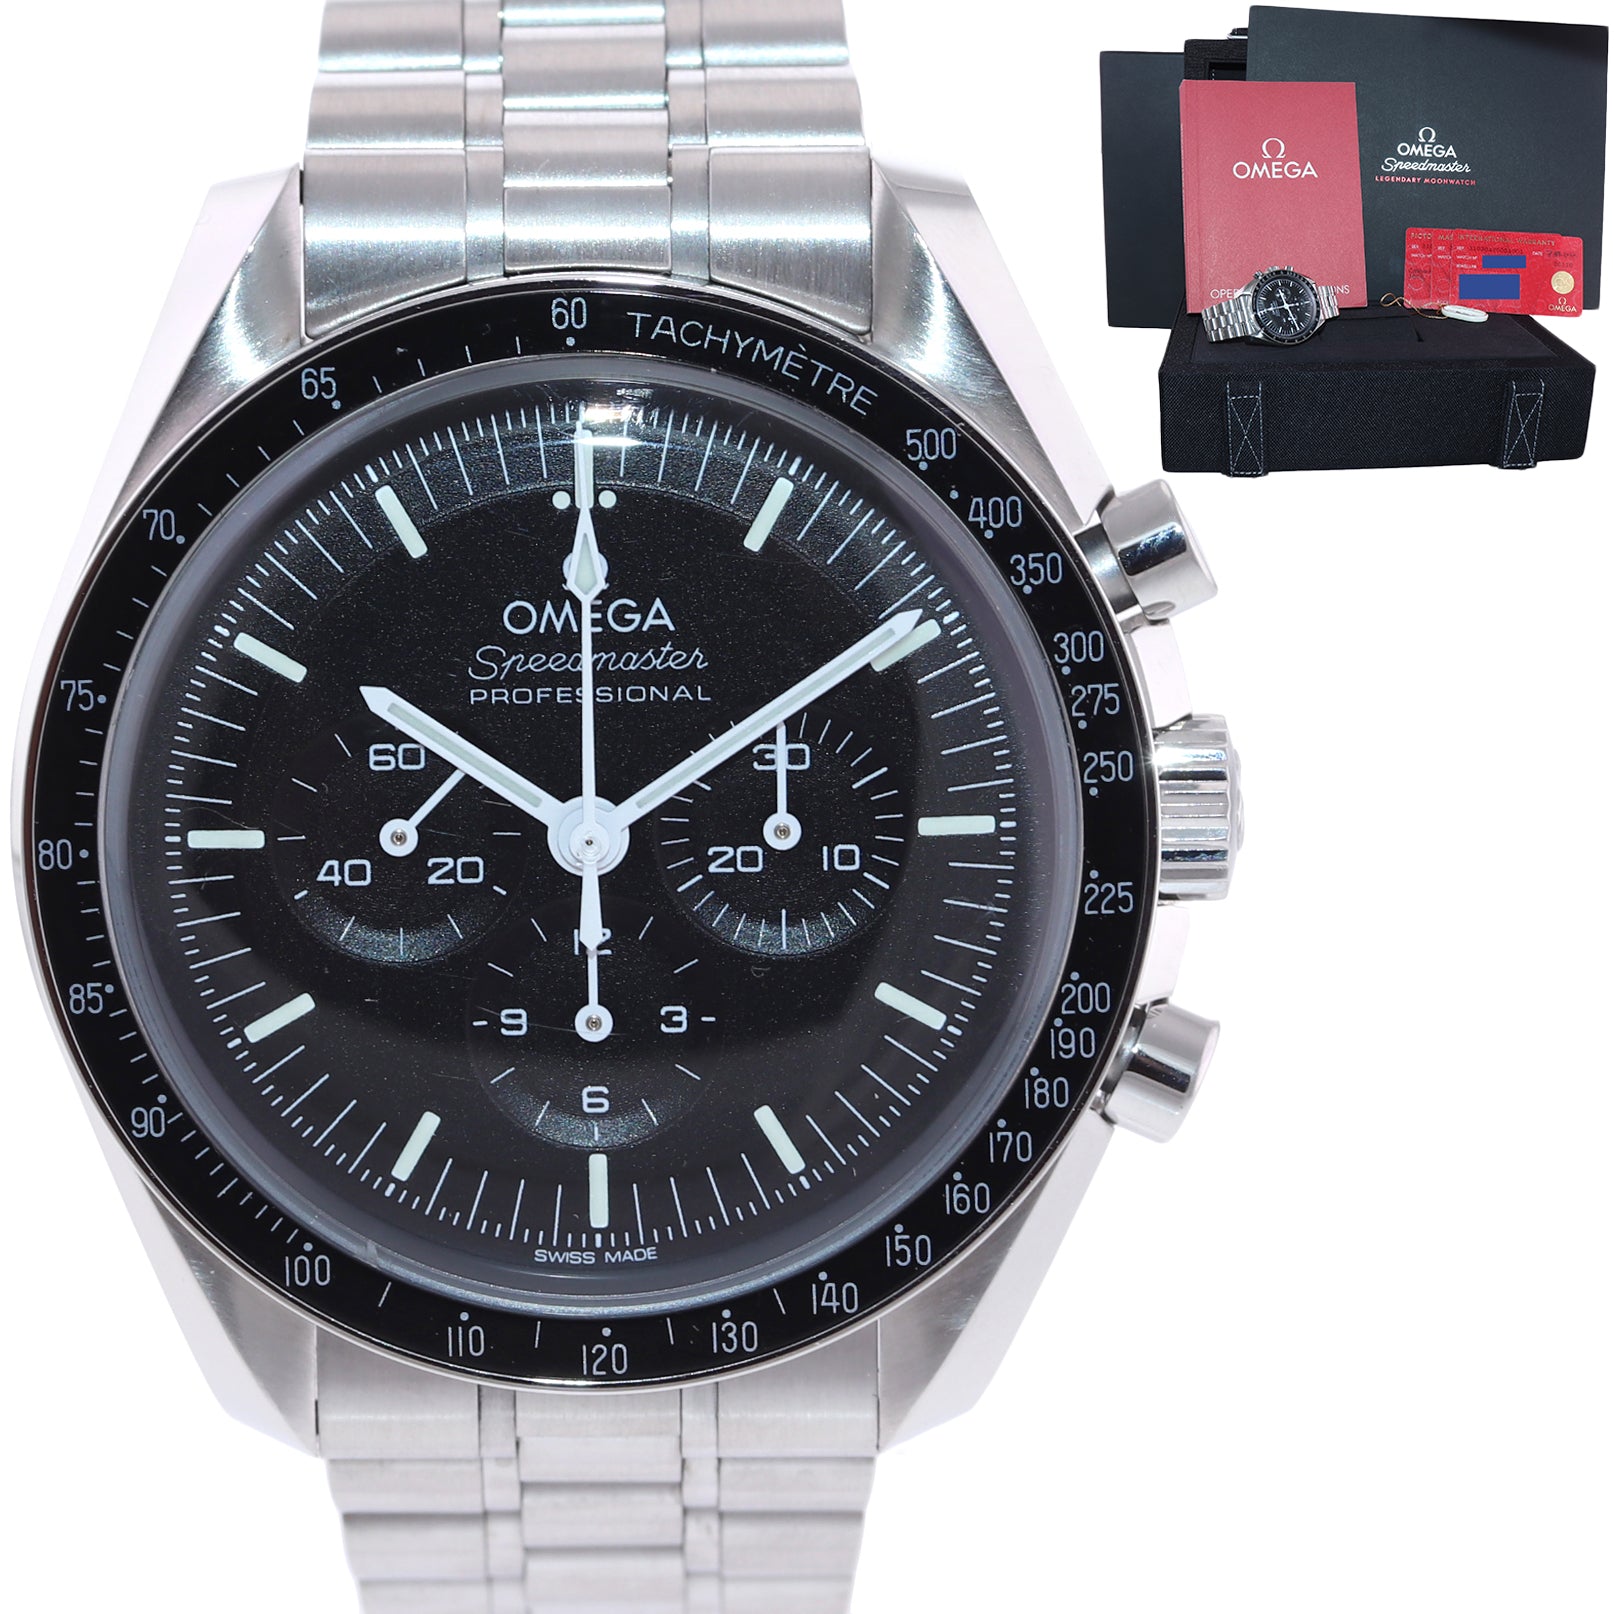 2021 PAPERS NEW Omega Speedmaster 310.30.42.50.01.001 Hesalite Steel 42mm Watch